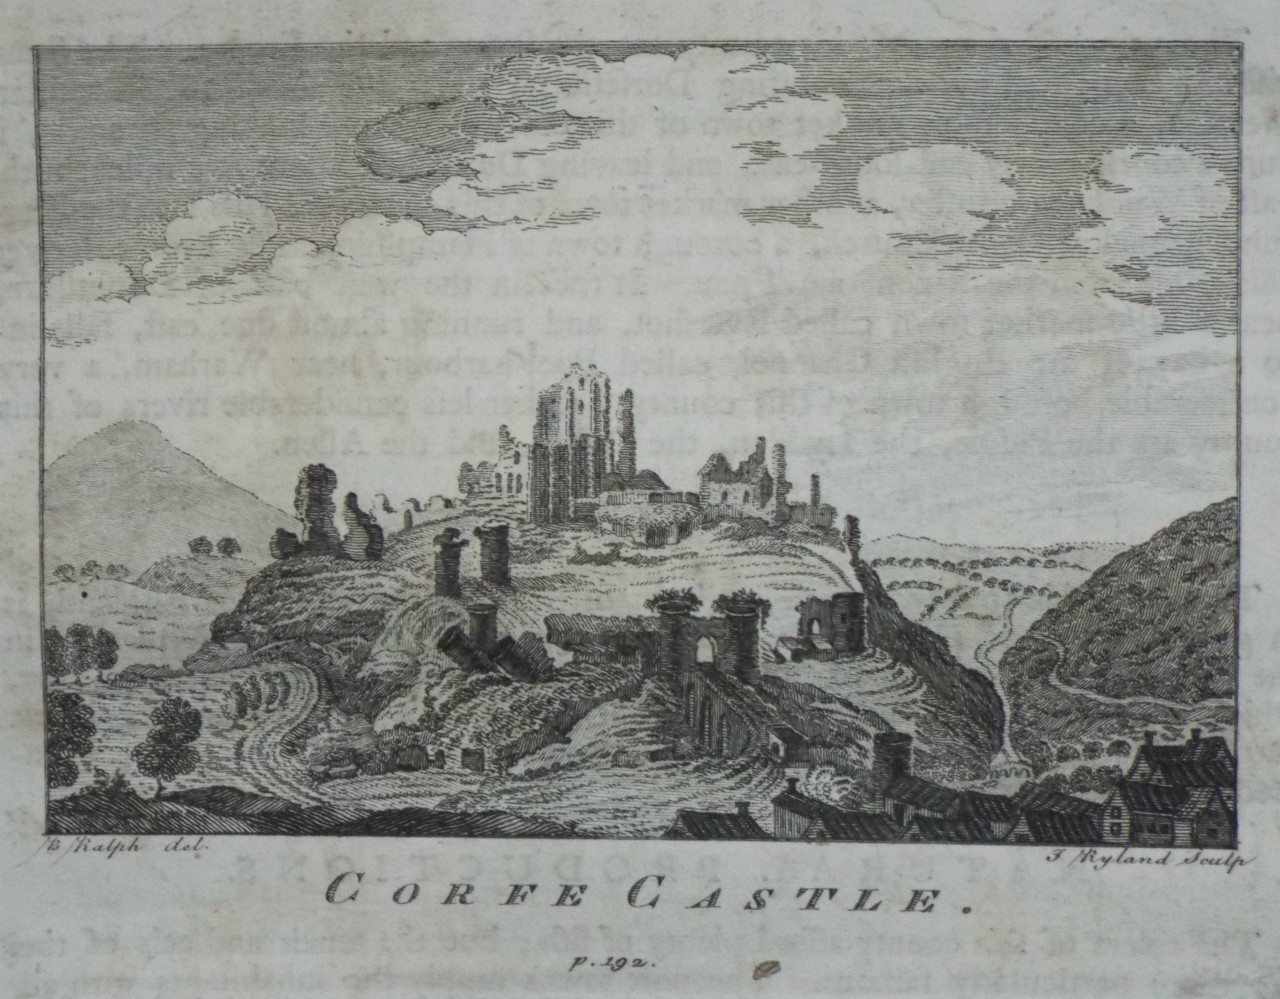 Print - Corfe Castle p.190. - Ryland